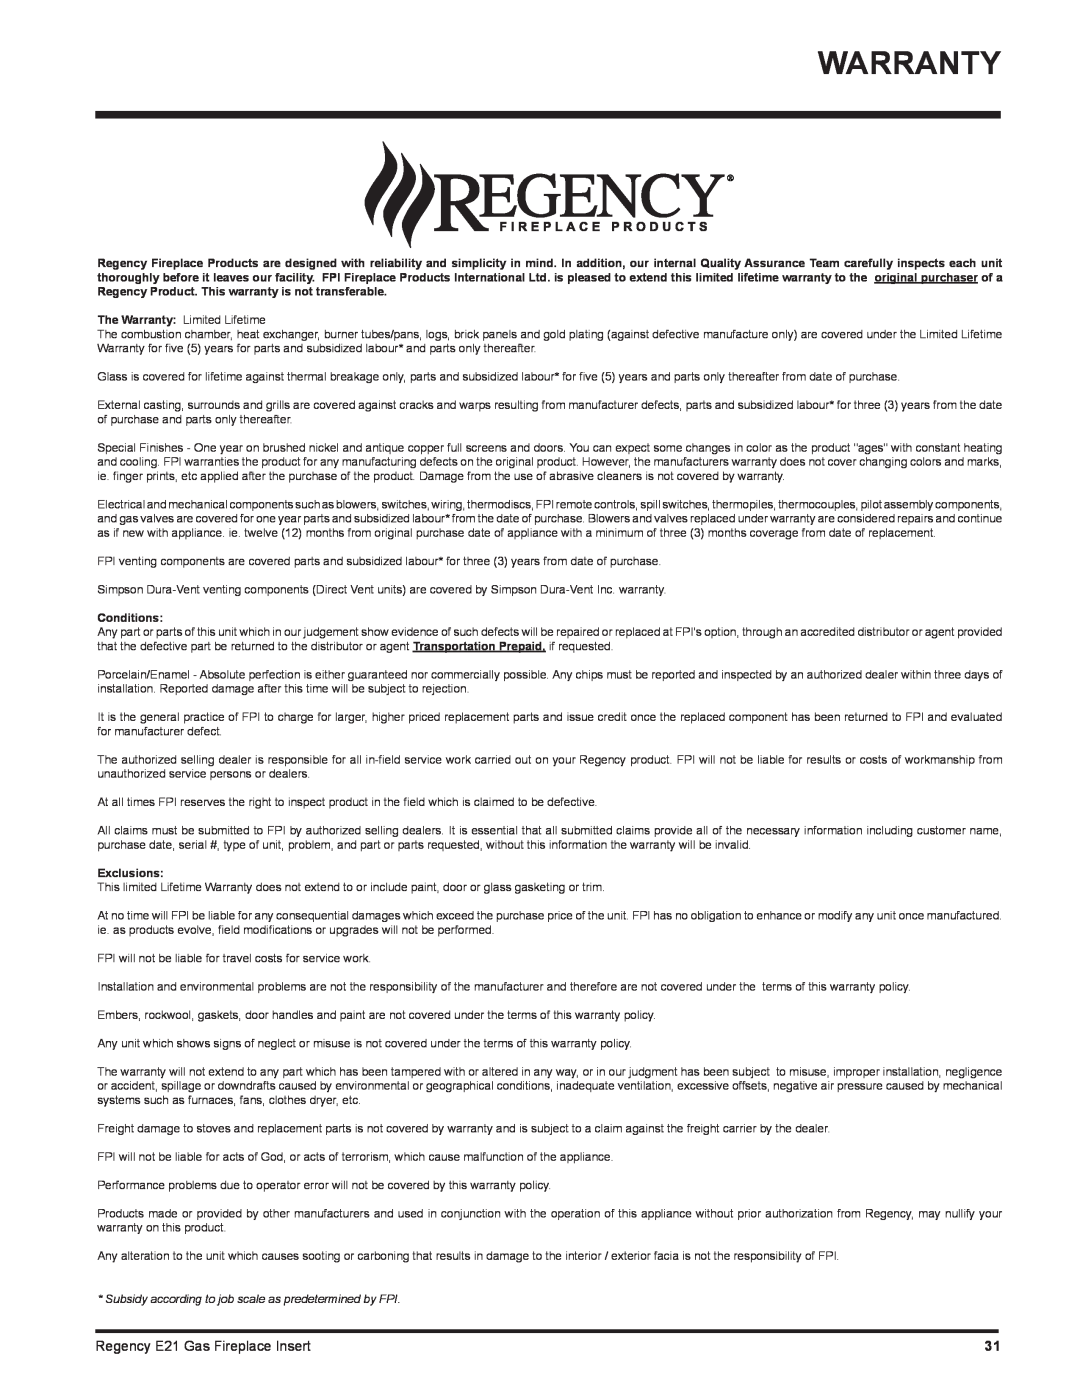 Regency E21-NG1, E21-LP1 installation manual Warranty, Conditions, Exclusions 